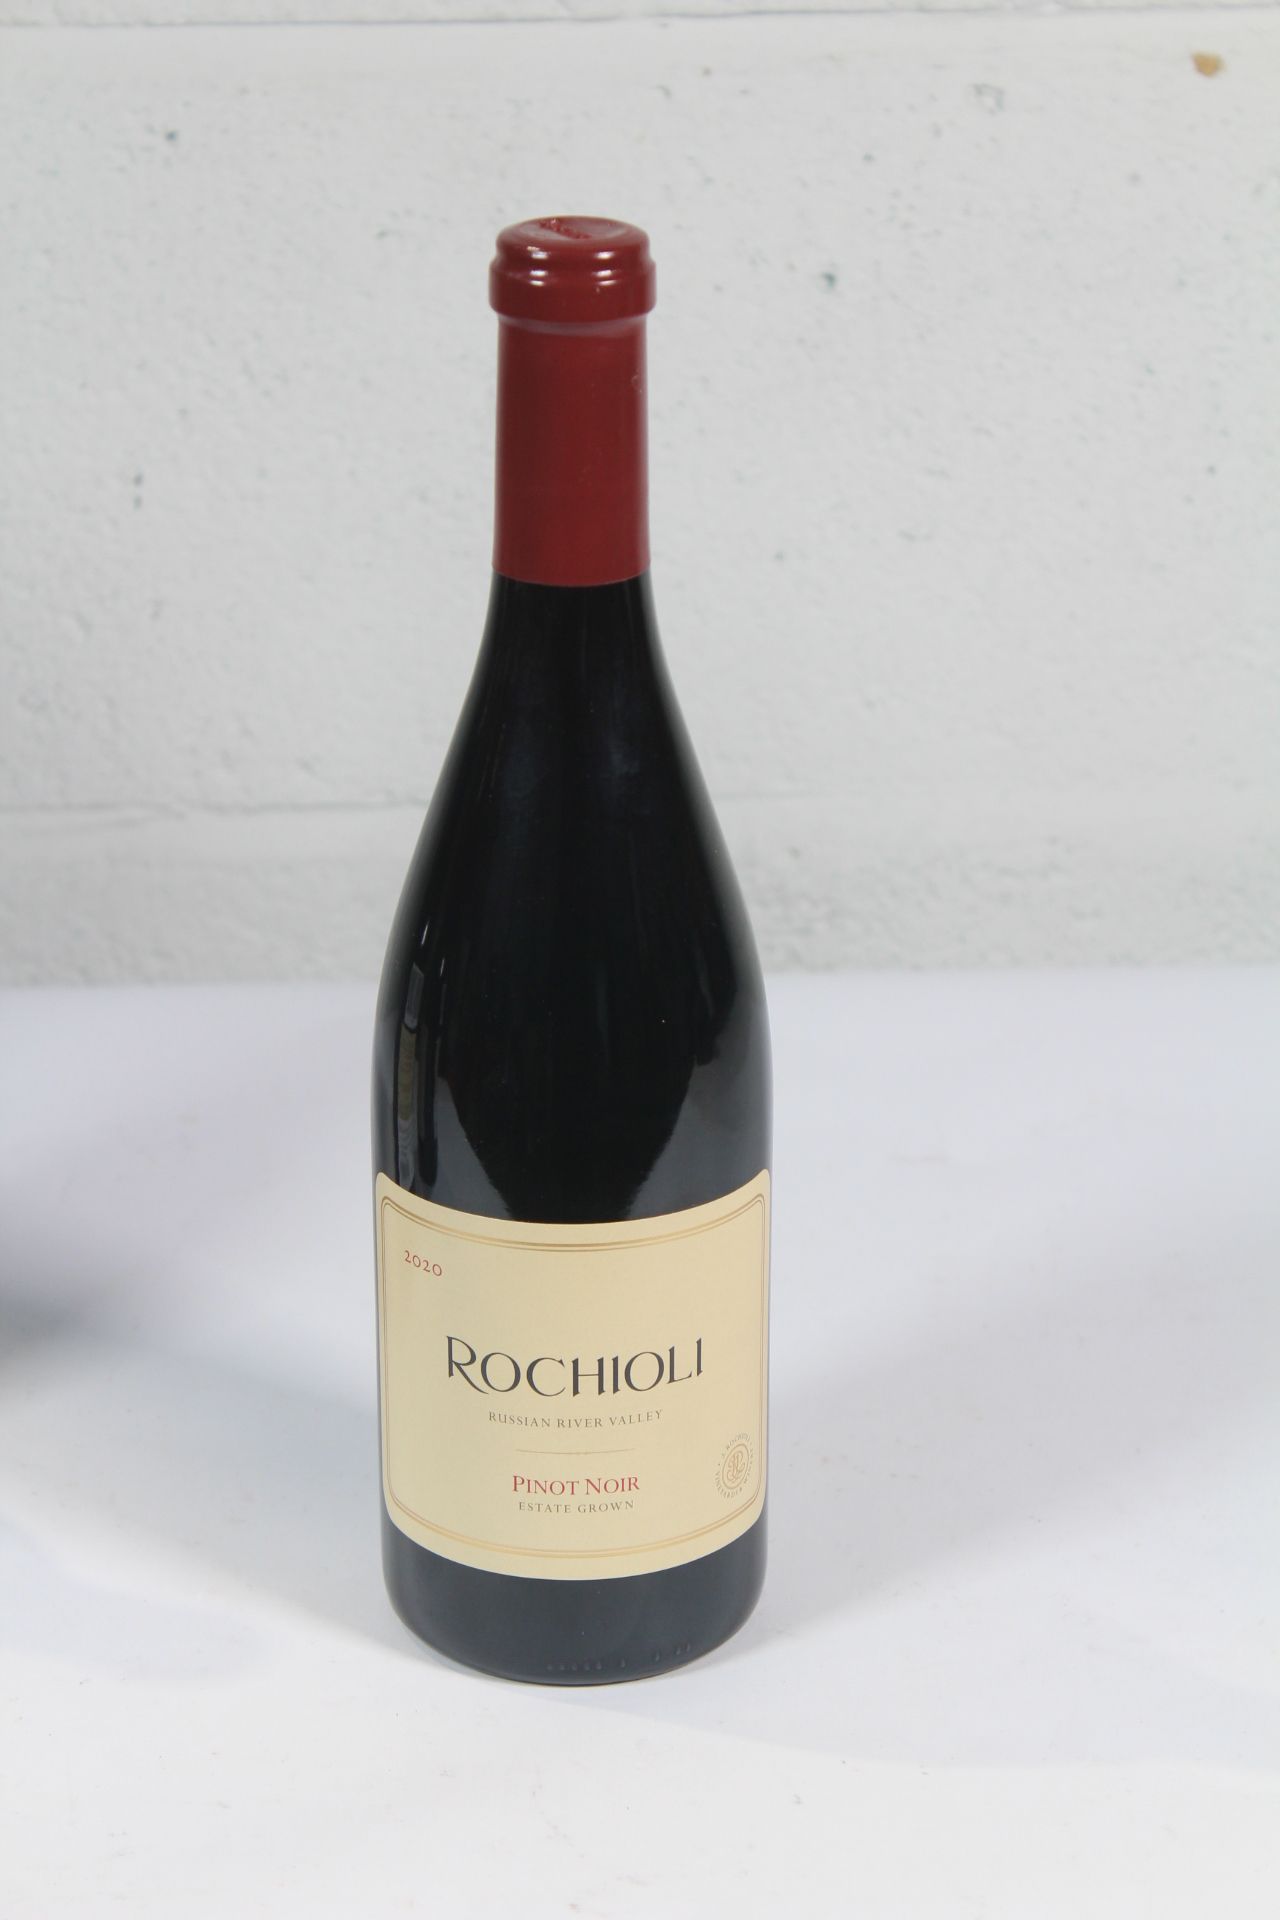 Rochioli Russian Valley 2020 Pinot Noir Red Wine 750ml.